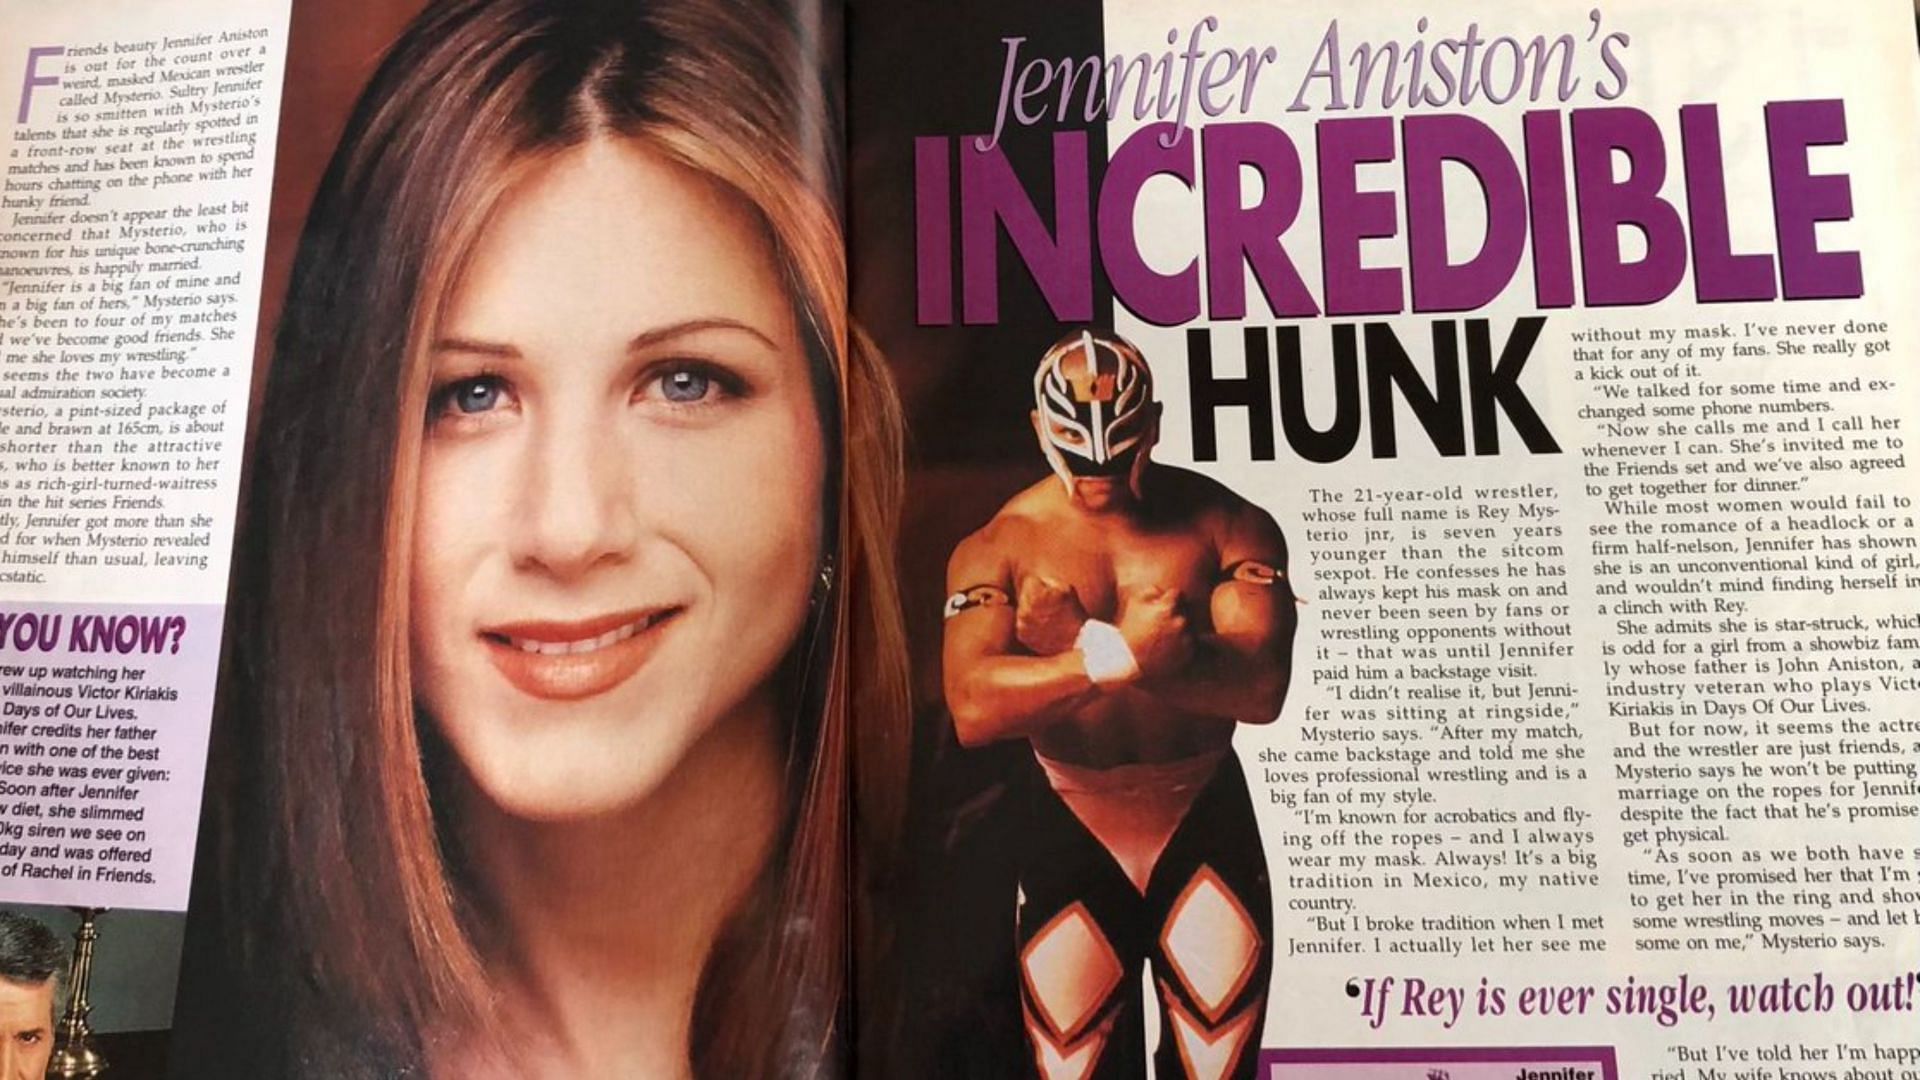 WWE legend Rey Mysterio was rumored to date Jennifer Aniston